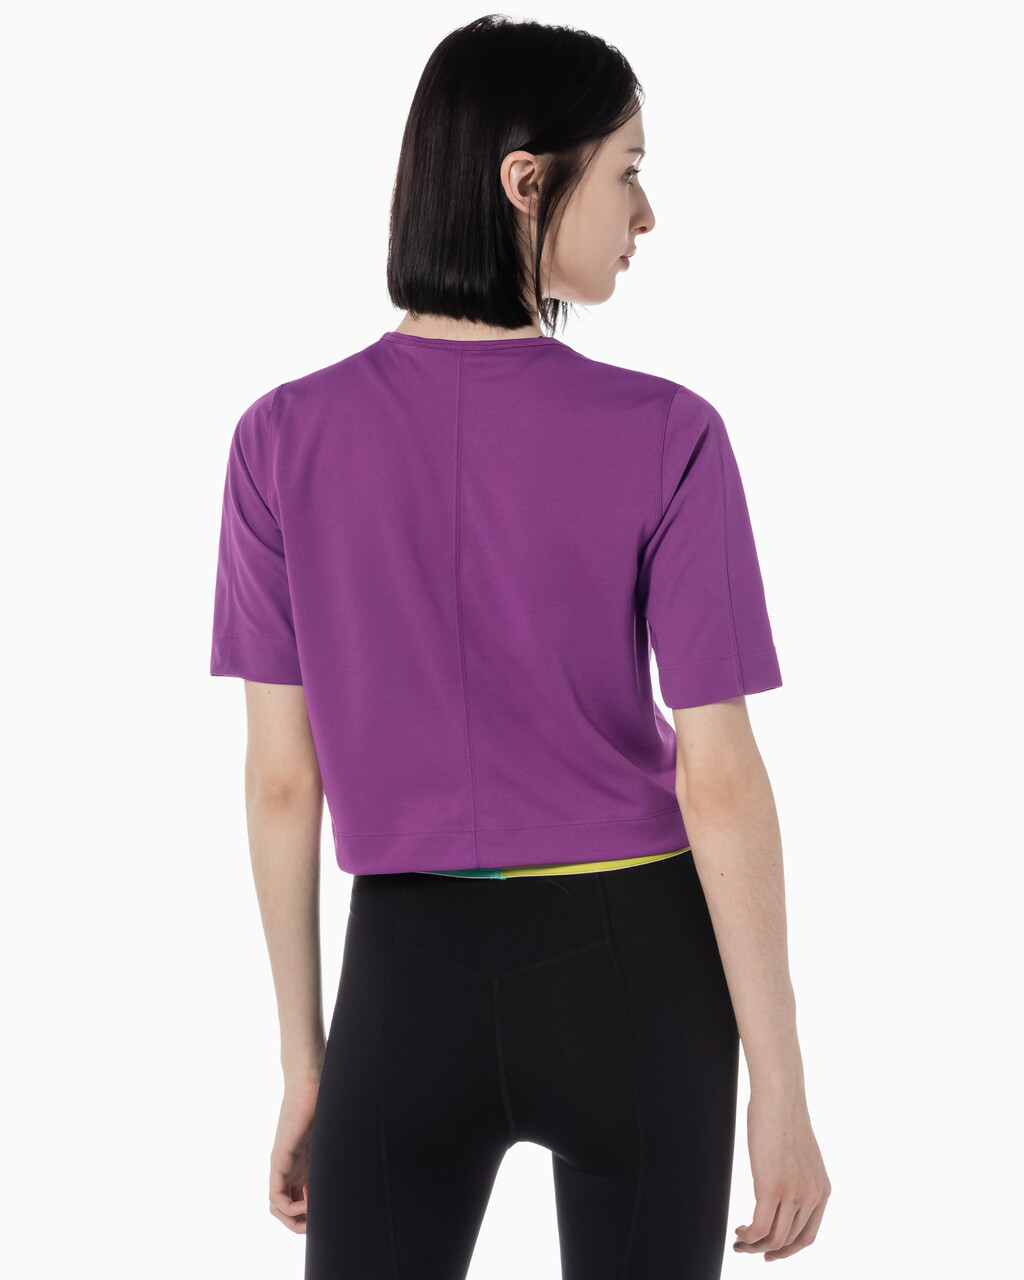 Buy 여성 박시 핏 에센셜 기능성 반팔 티셔츠 in color AMETHYST